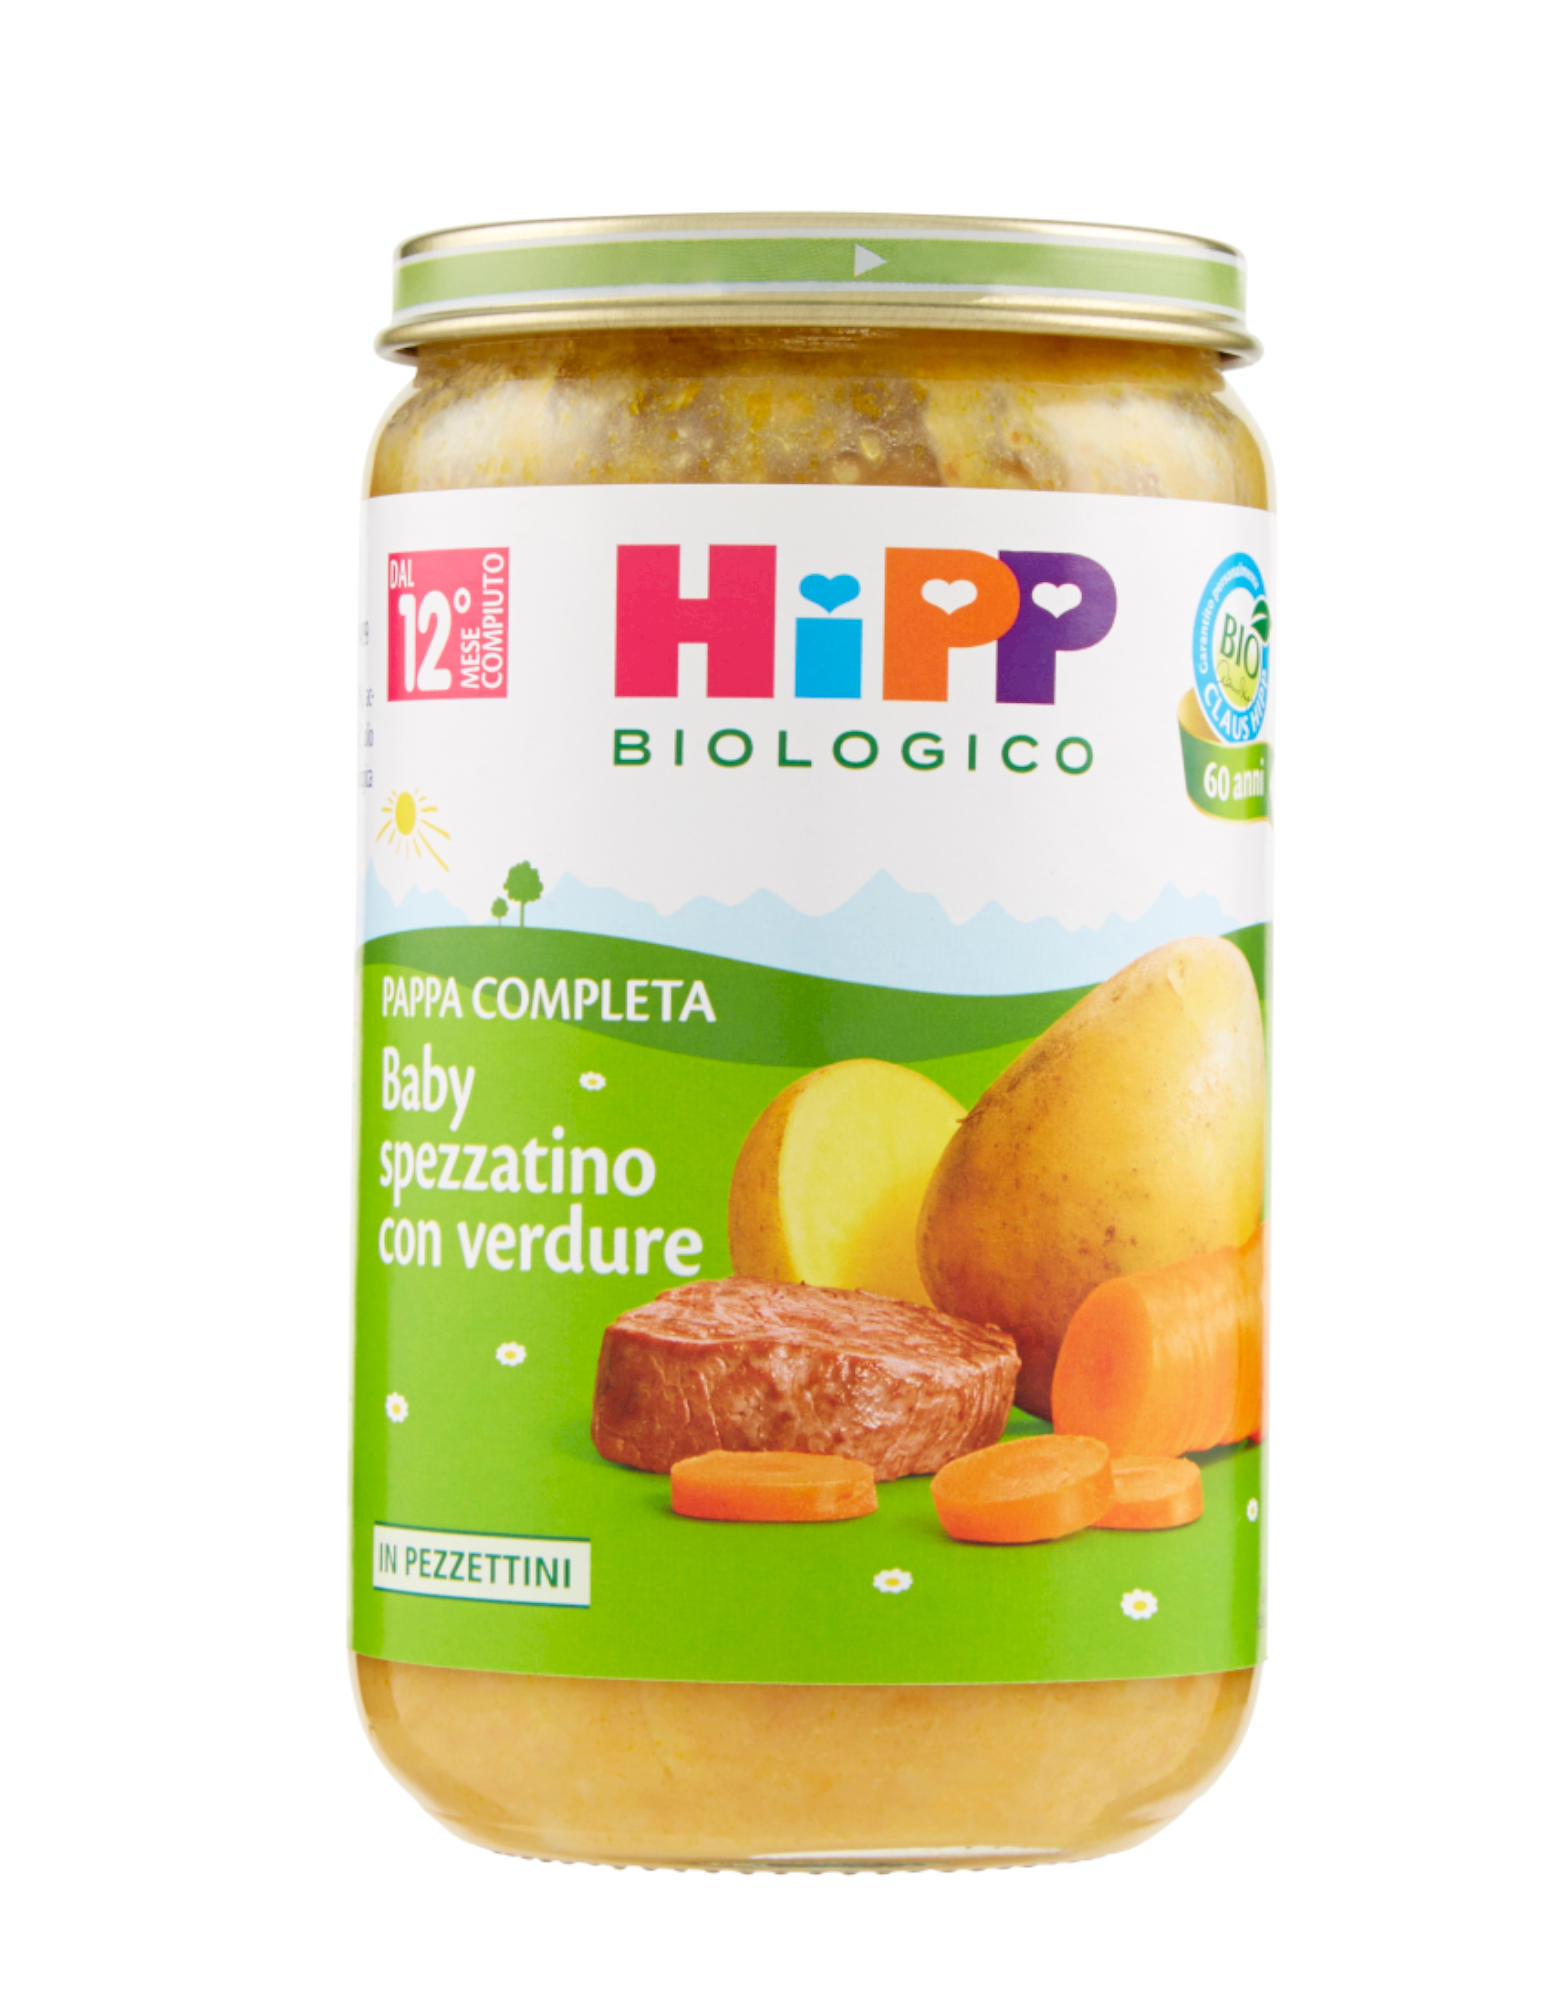 HIPP Baby Spezzatino Con Verdure 250g